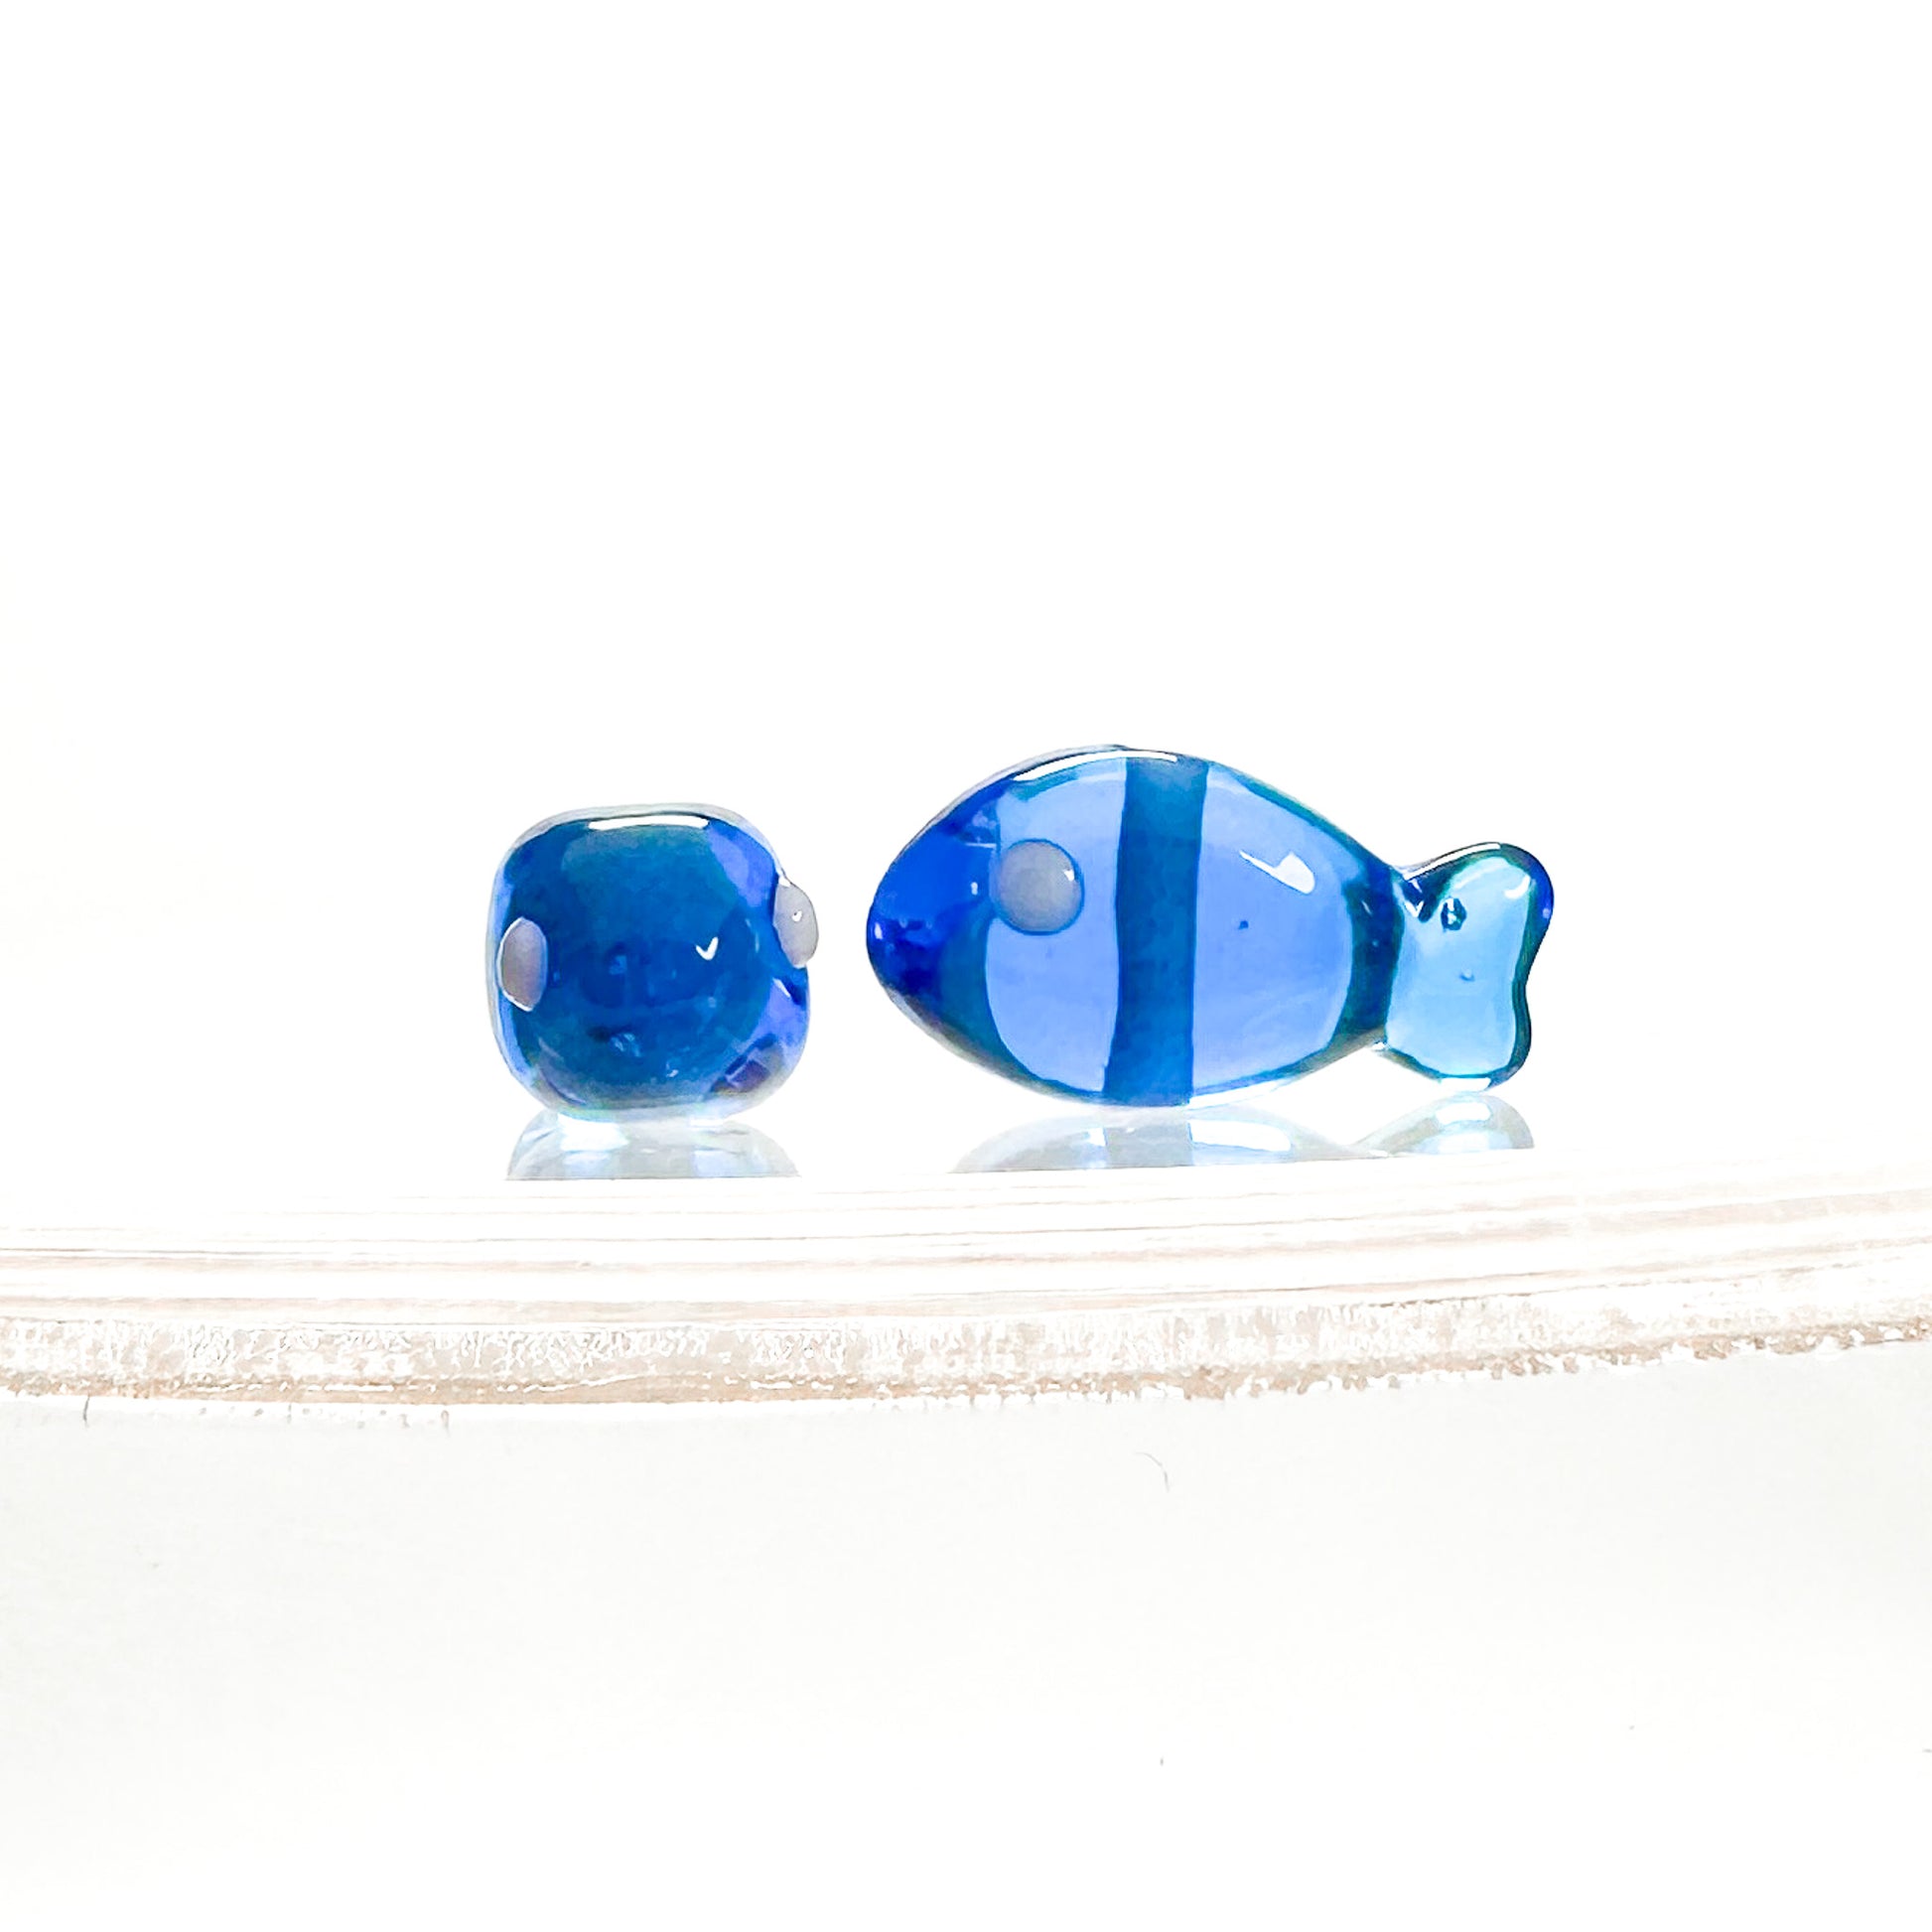 Chibi Handmade Glass Beads - Fish (2 Color Options) - 1 pc.-The Bead Gallery Honolulu